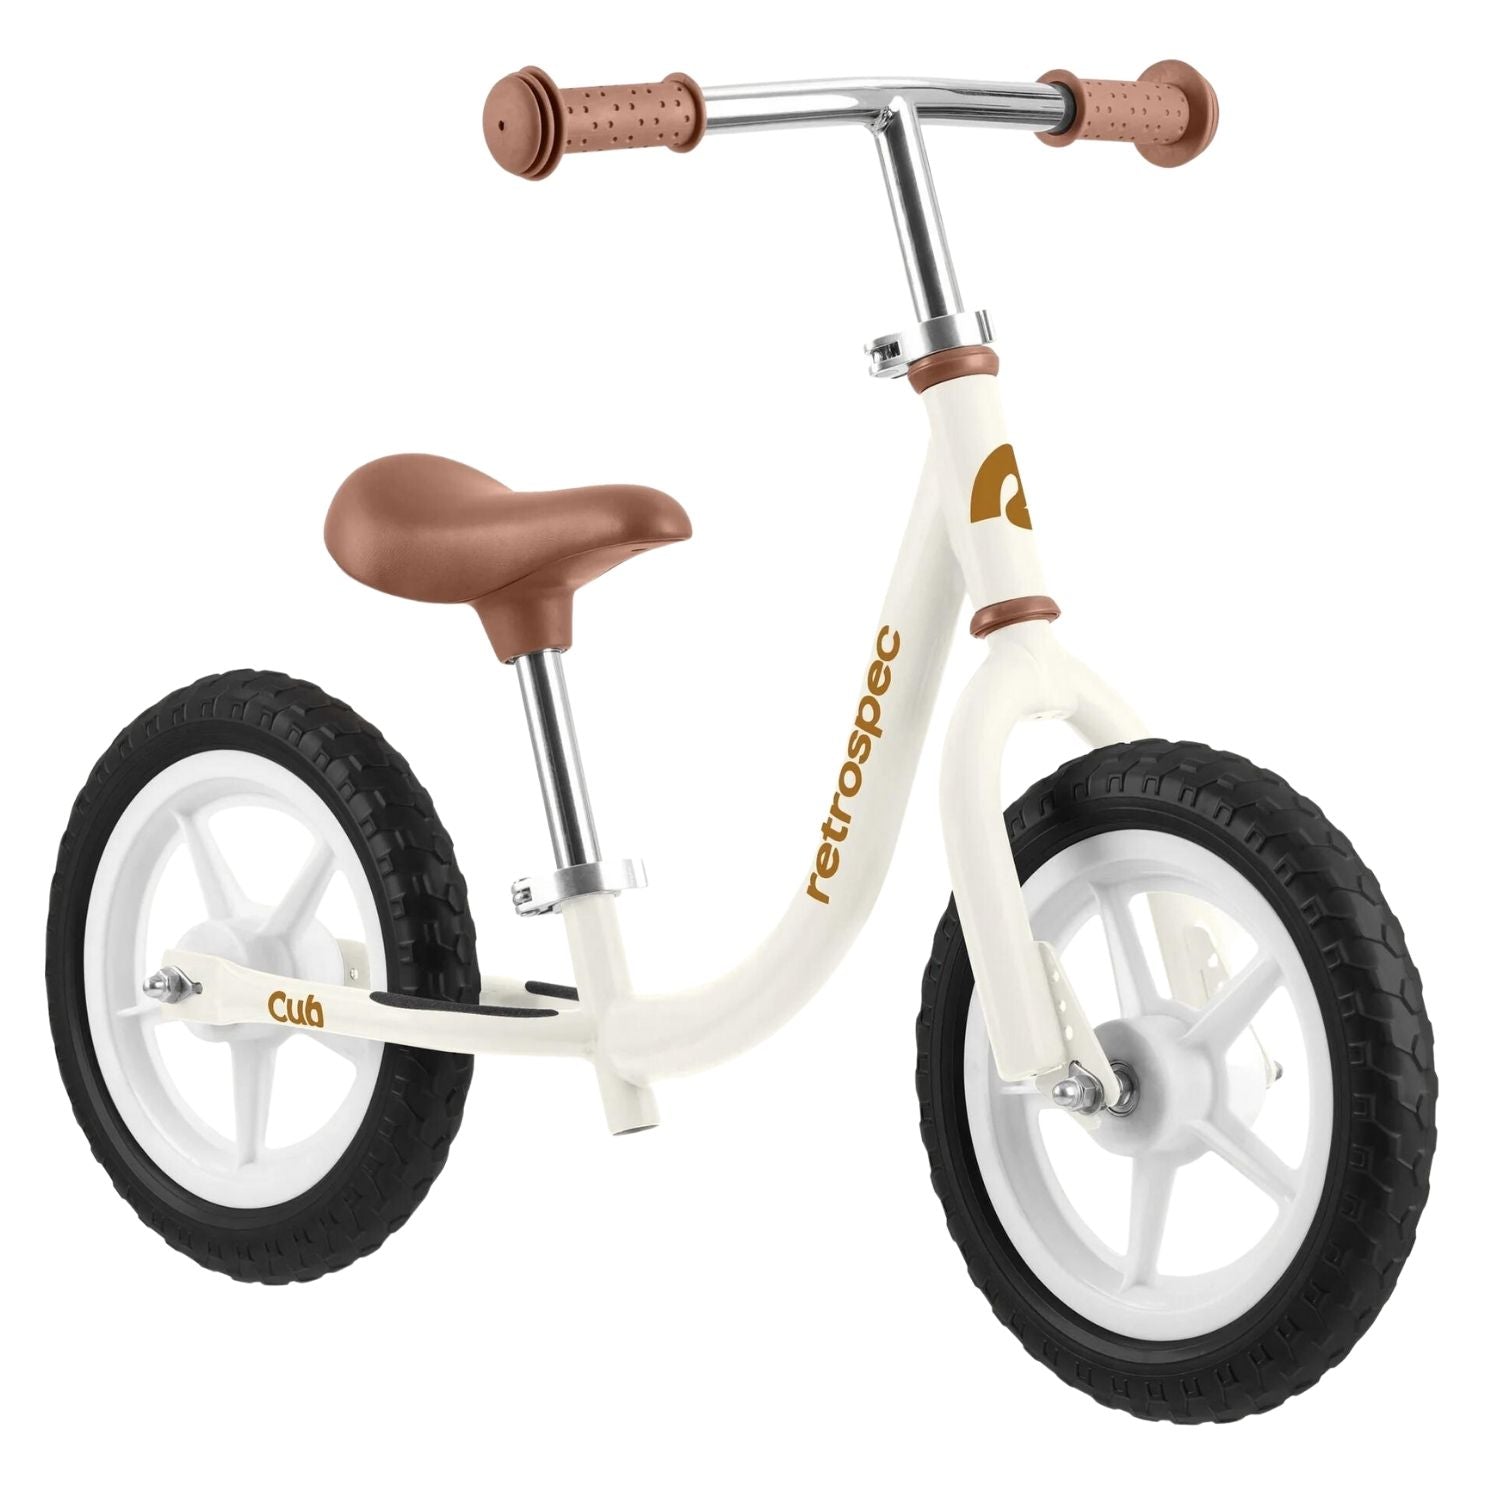 Retrospec Cub 2 Kids' Balance Bike - Eggshell